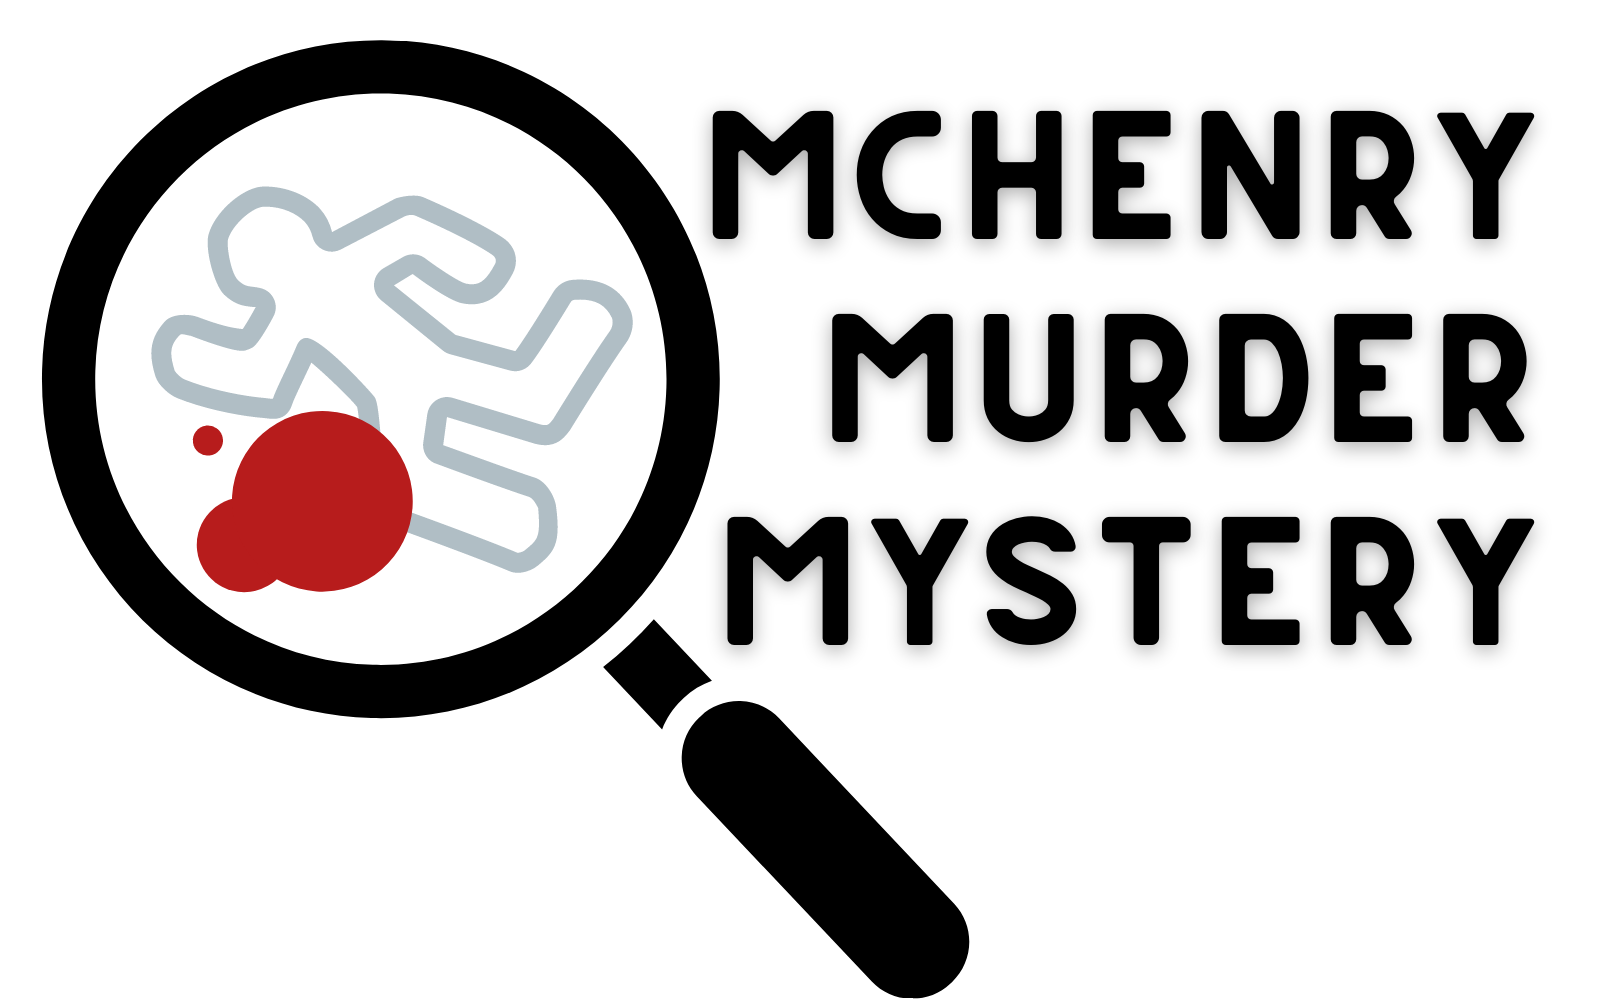 mystery logo